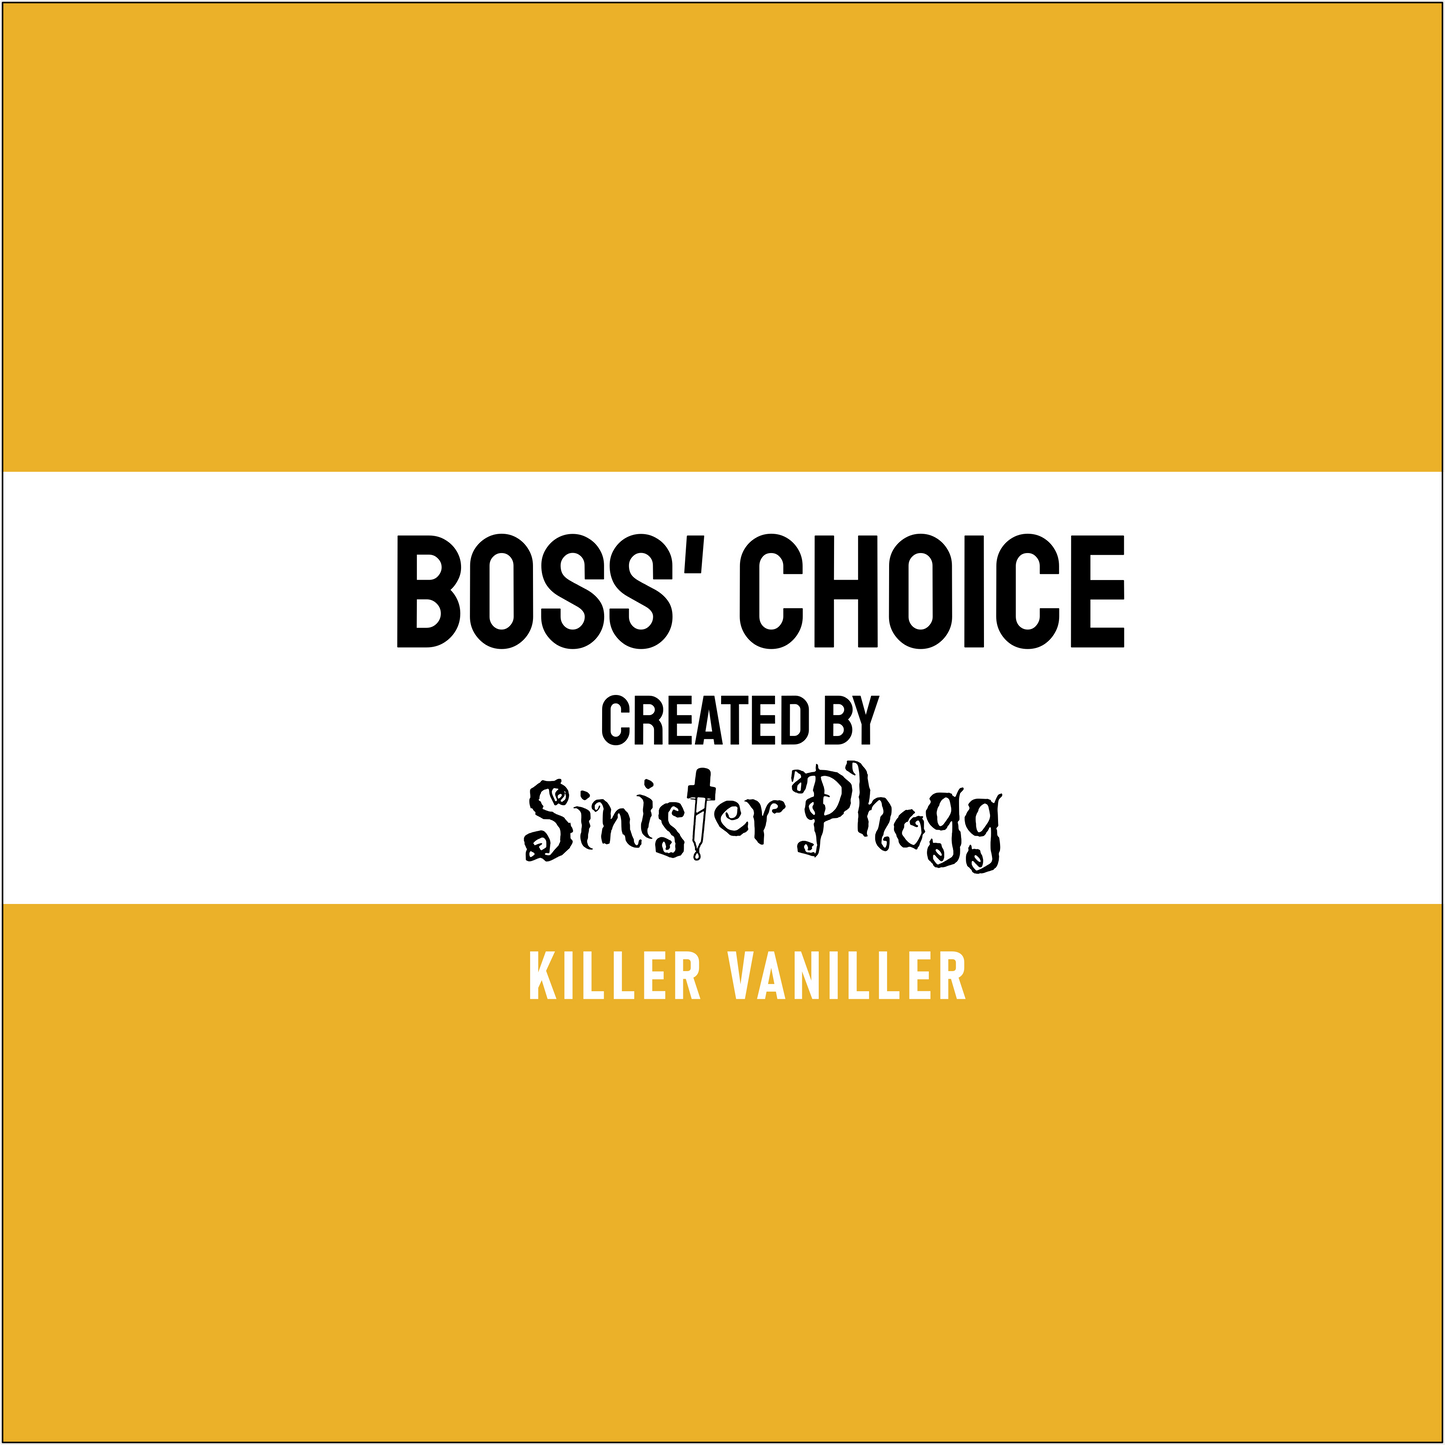 Killer Vaniller - Boss' Choice by Sinister Phogg